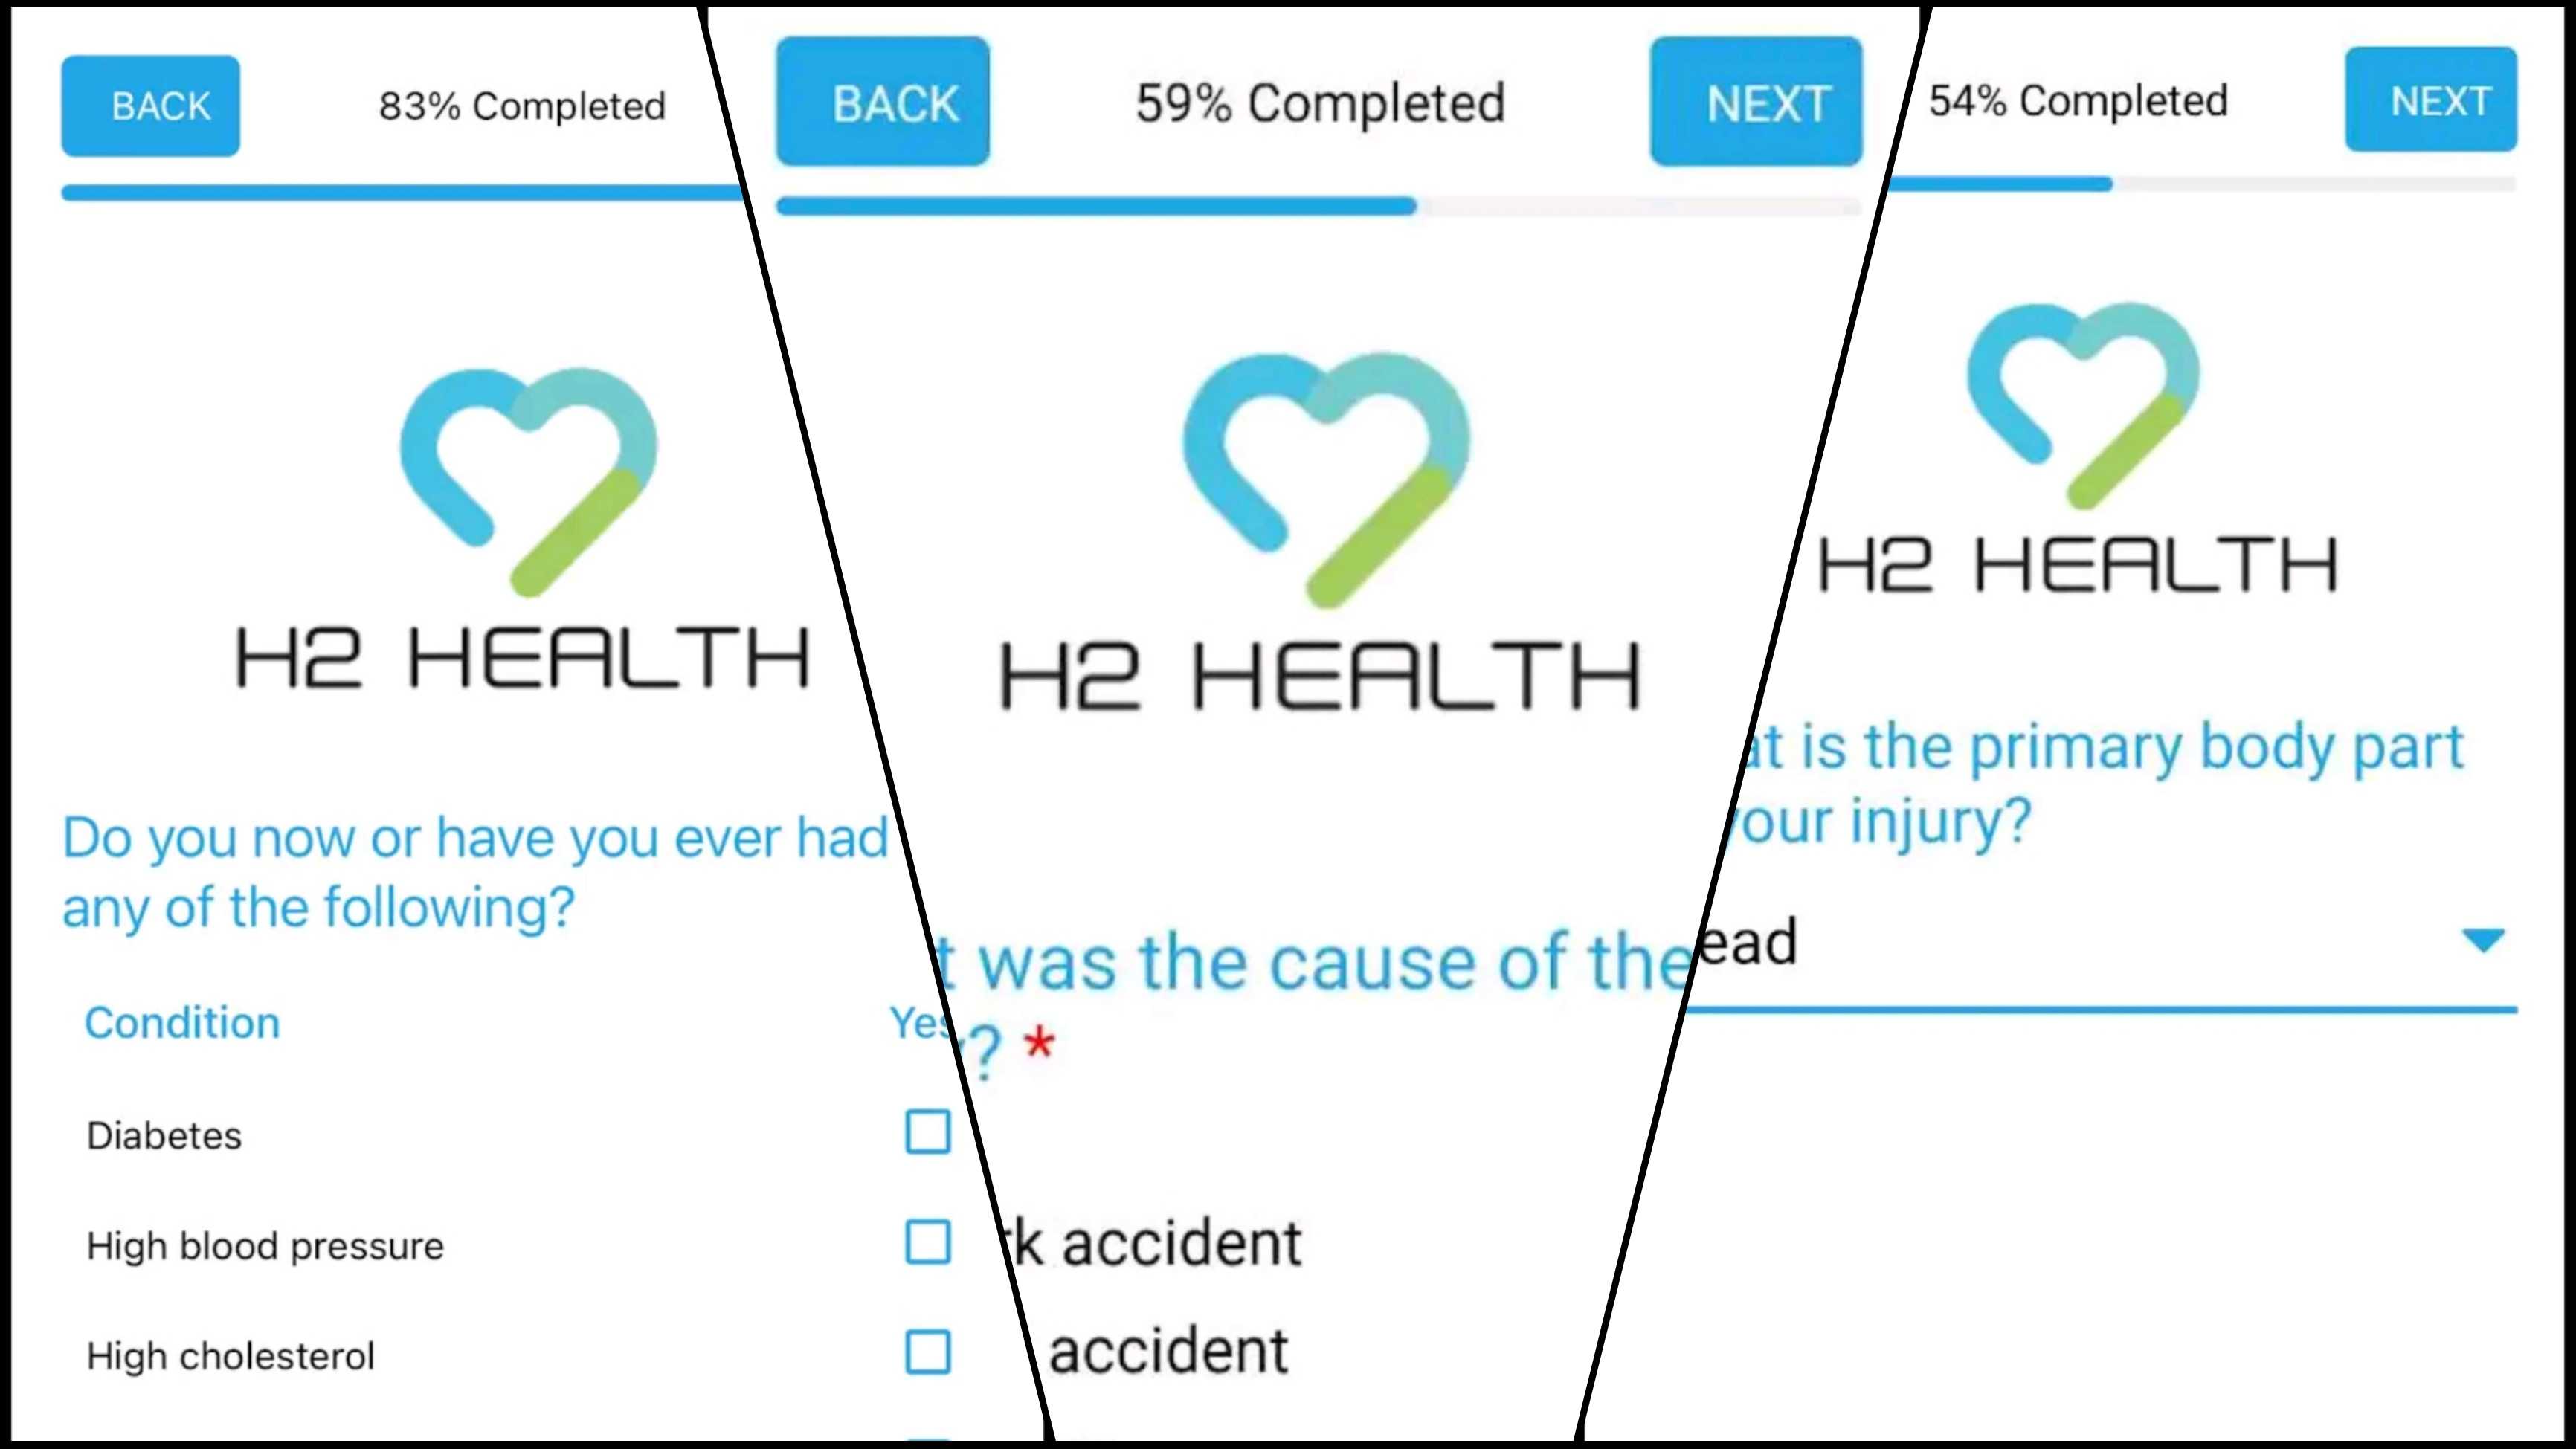 h2-health-cover.jpg's Logo